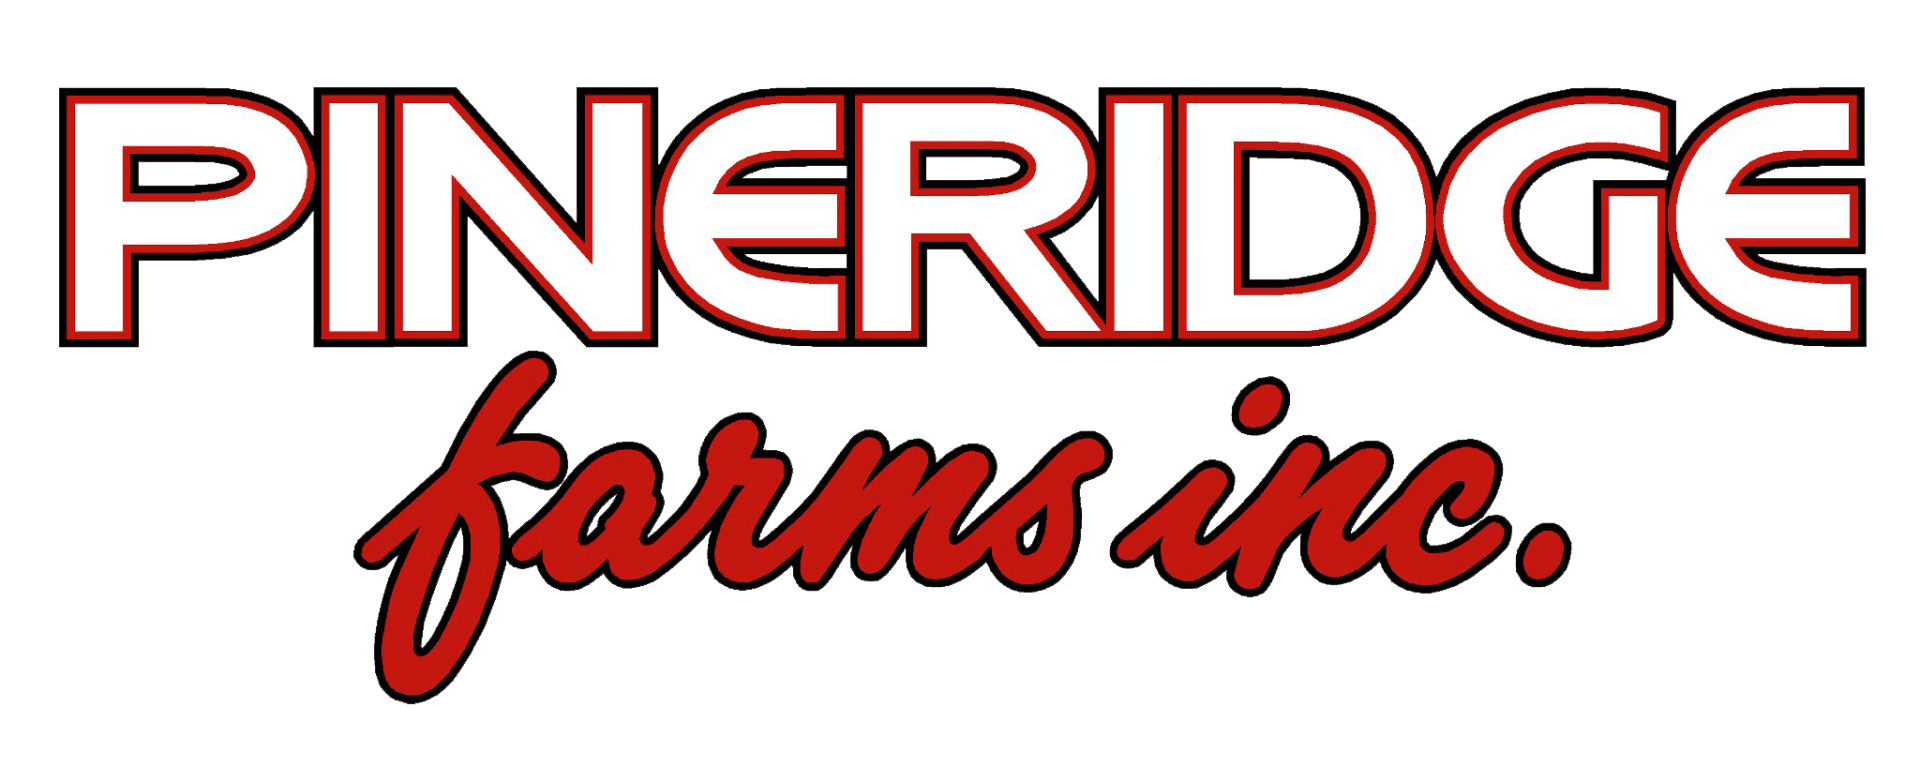 Pineridge Farms Inc logo